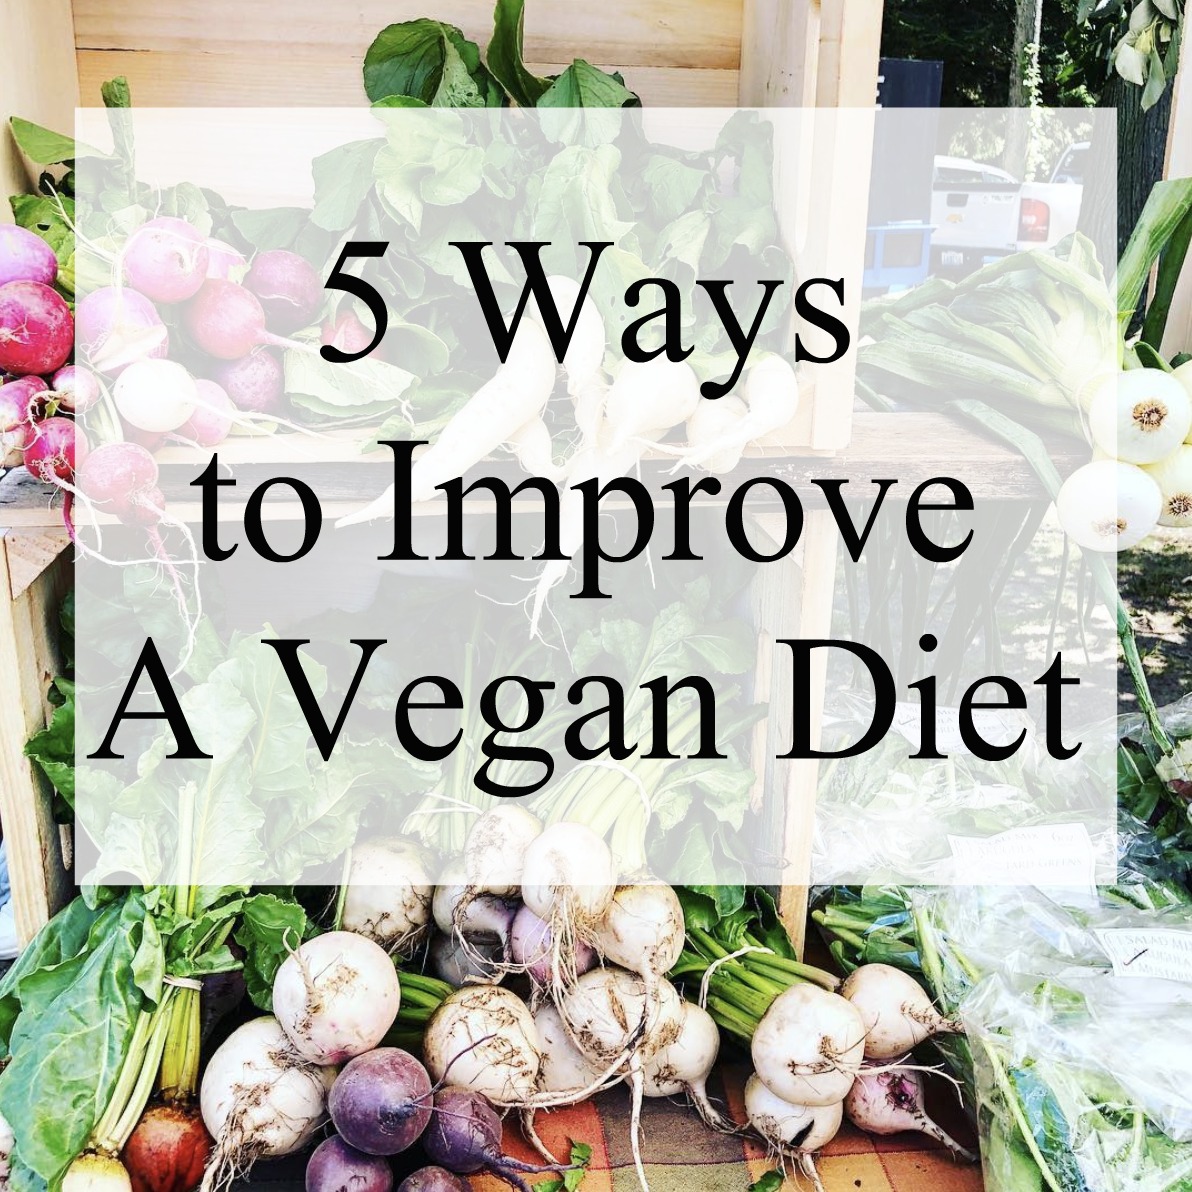 5 Ways to Improve A Vegan Diet